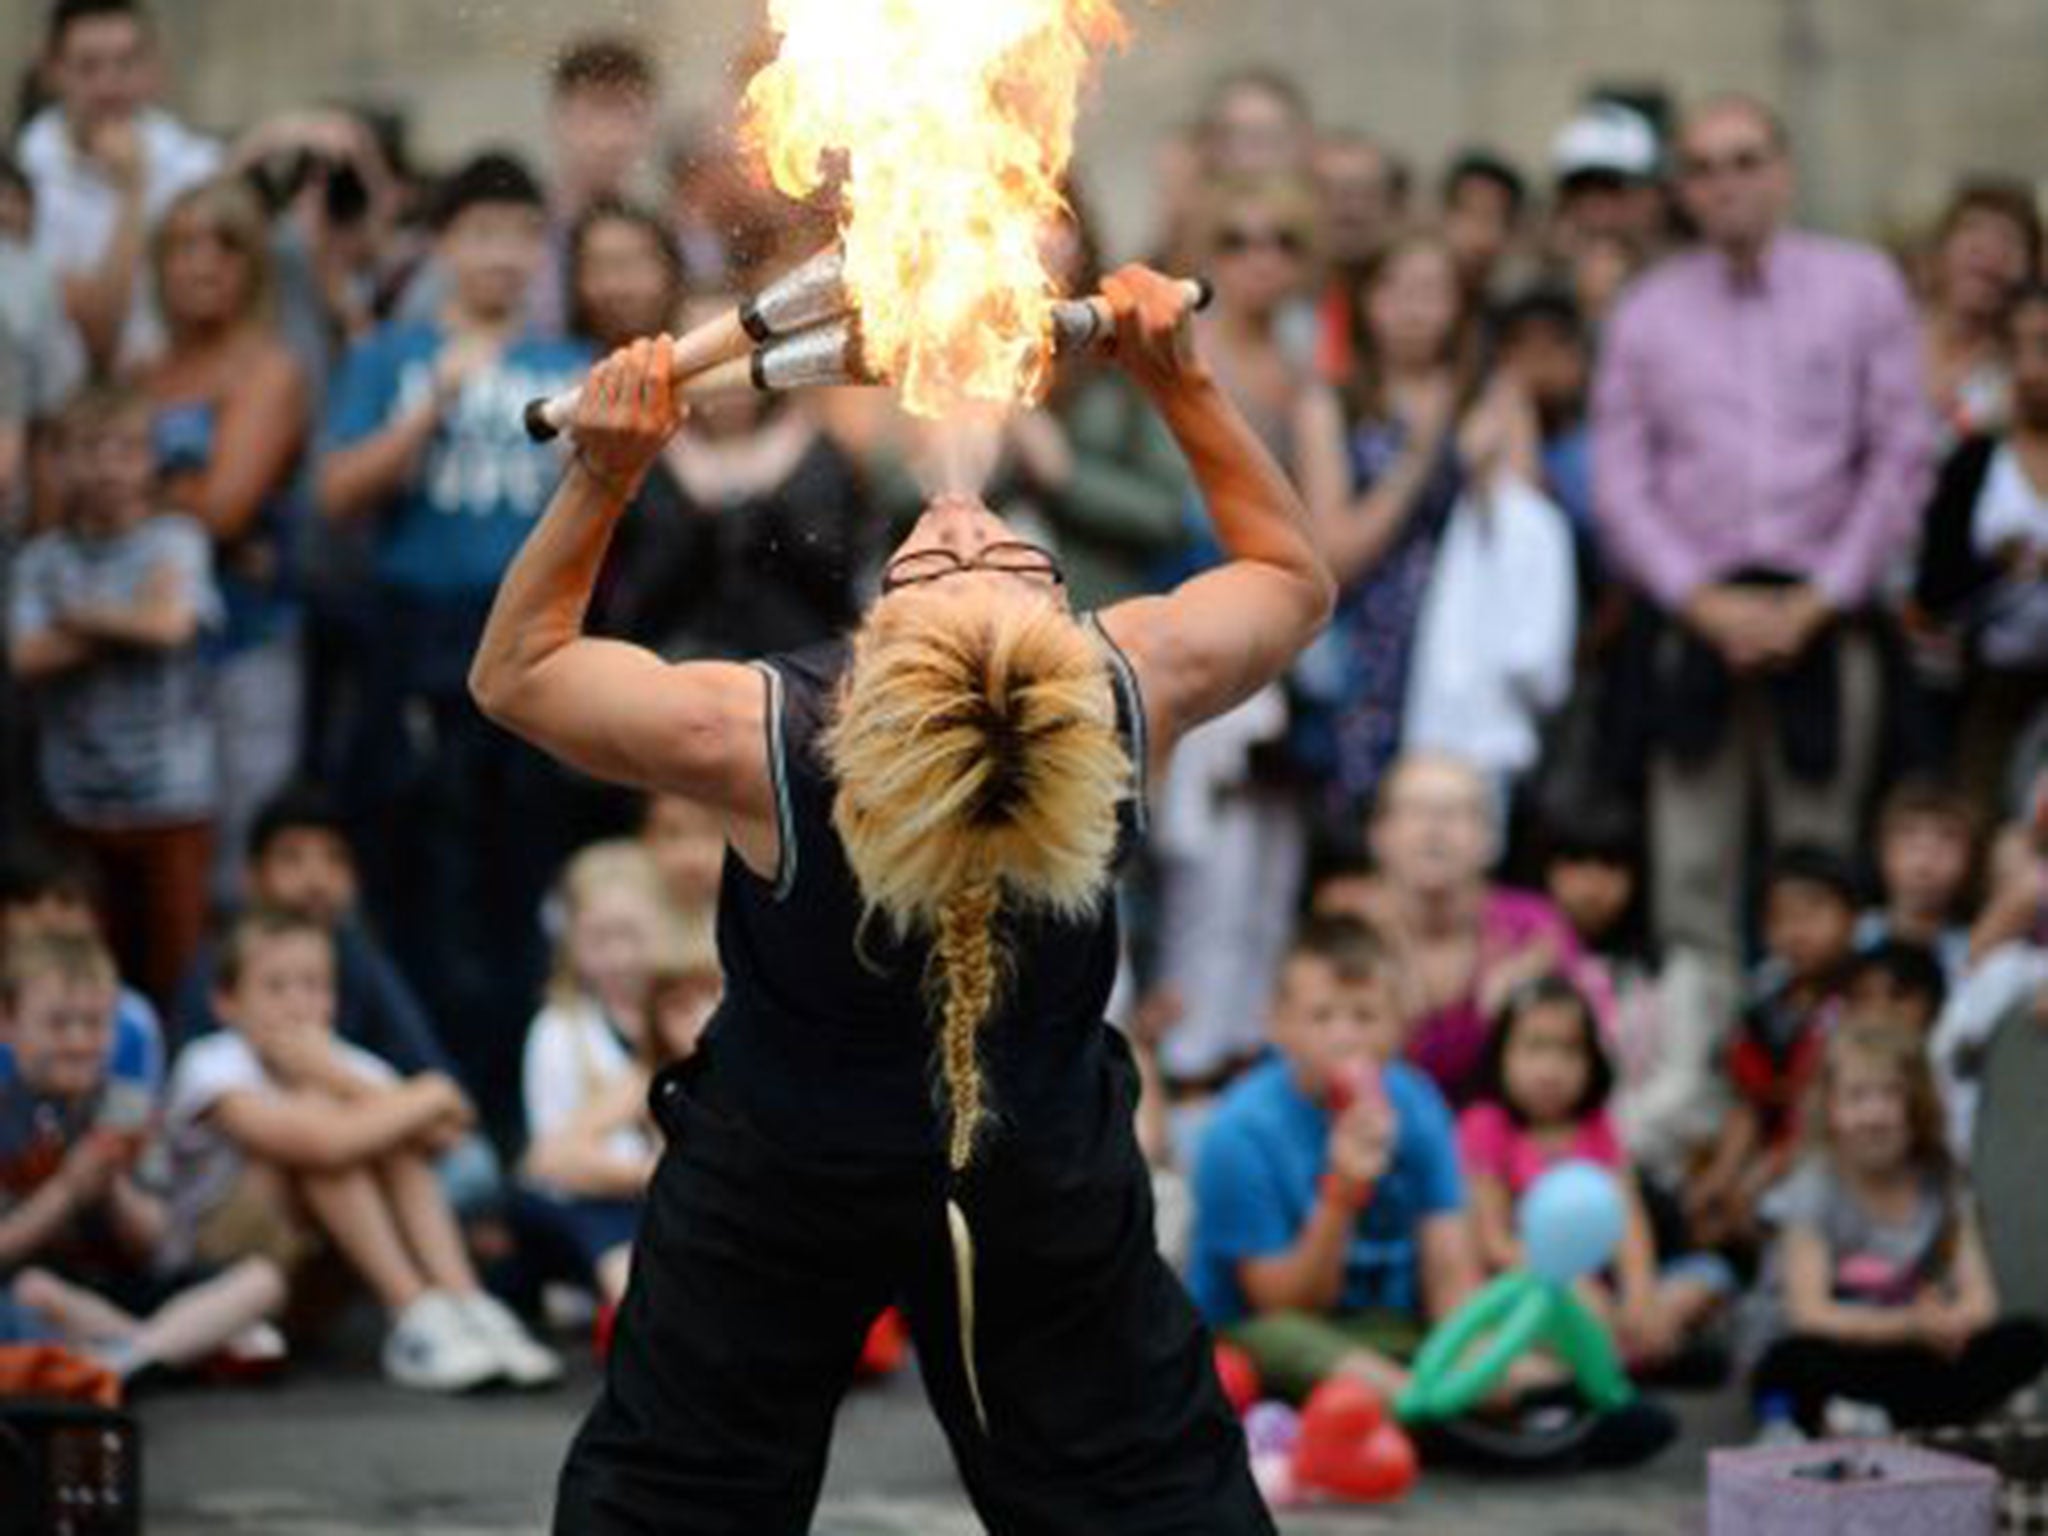 A street entertainer performs on Edinburgh's Royal Mile